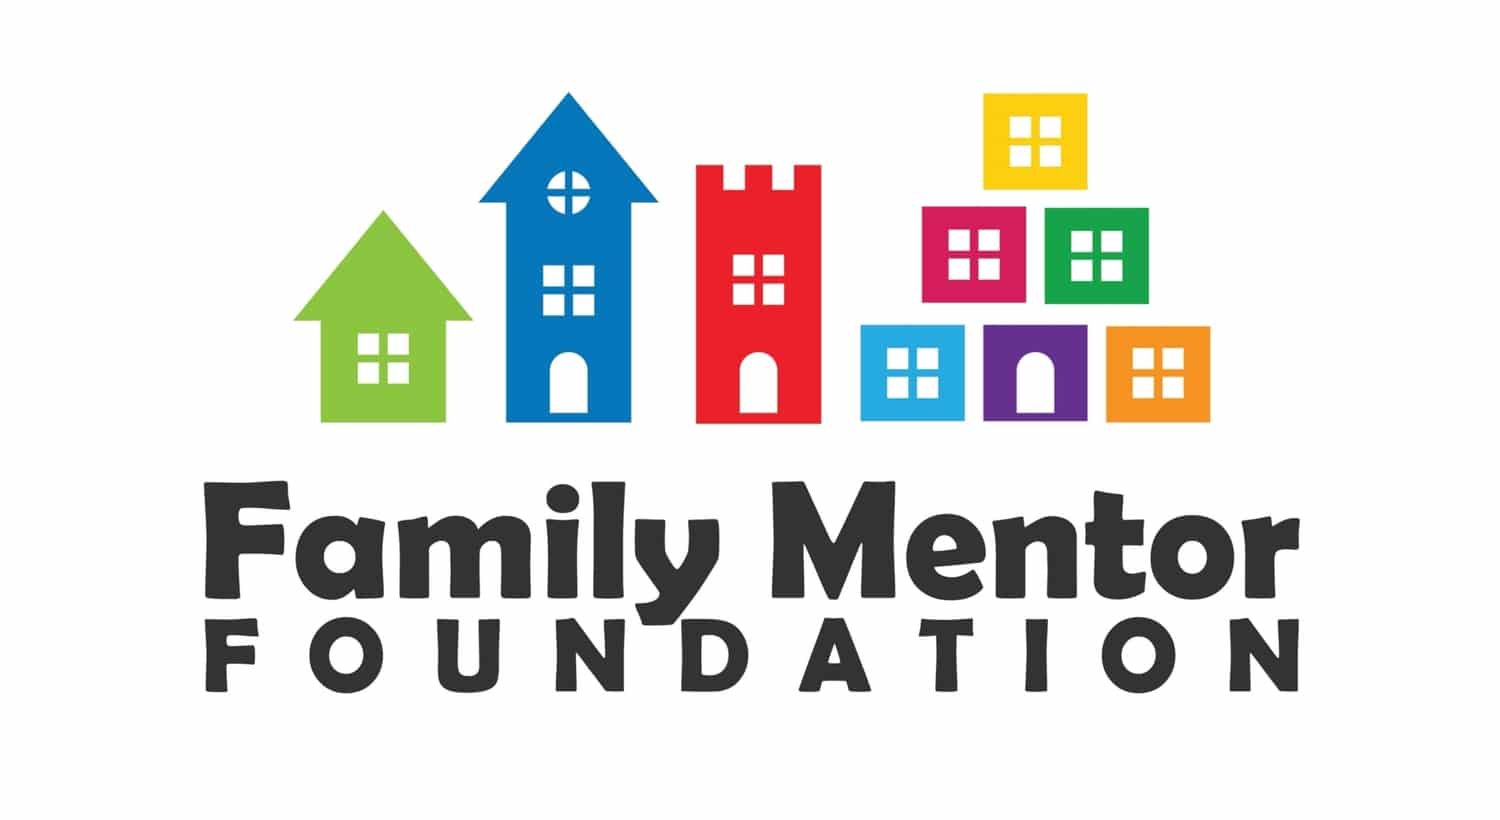 Family Mentor Foundation